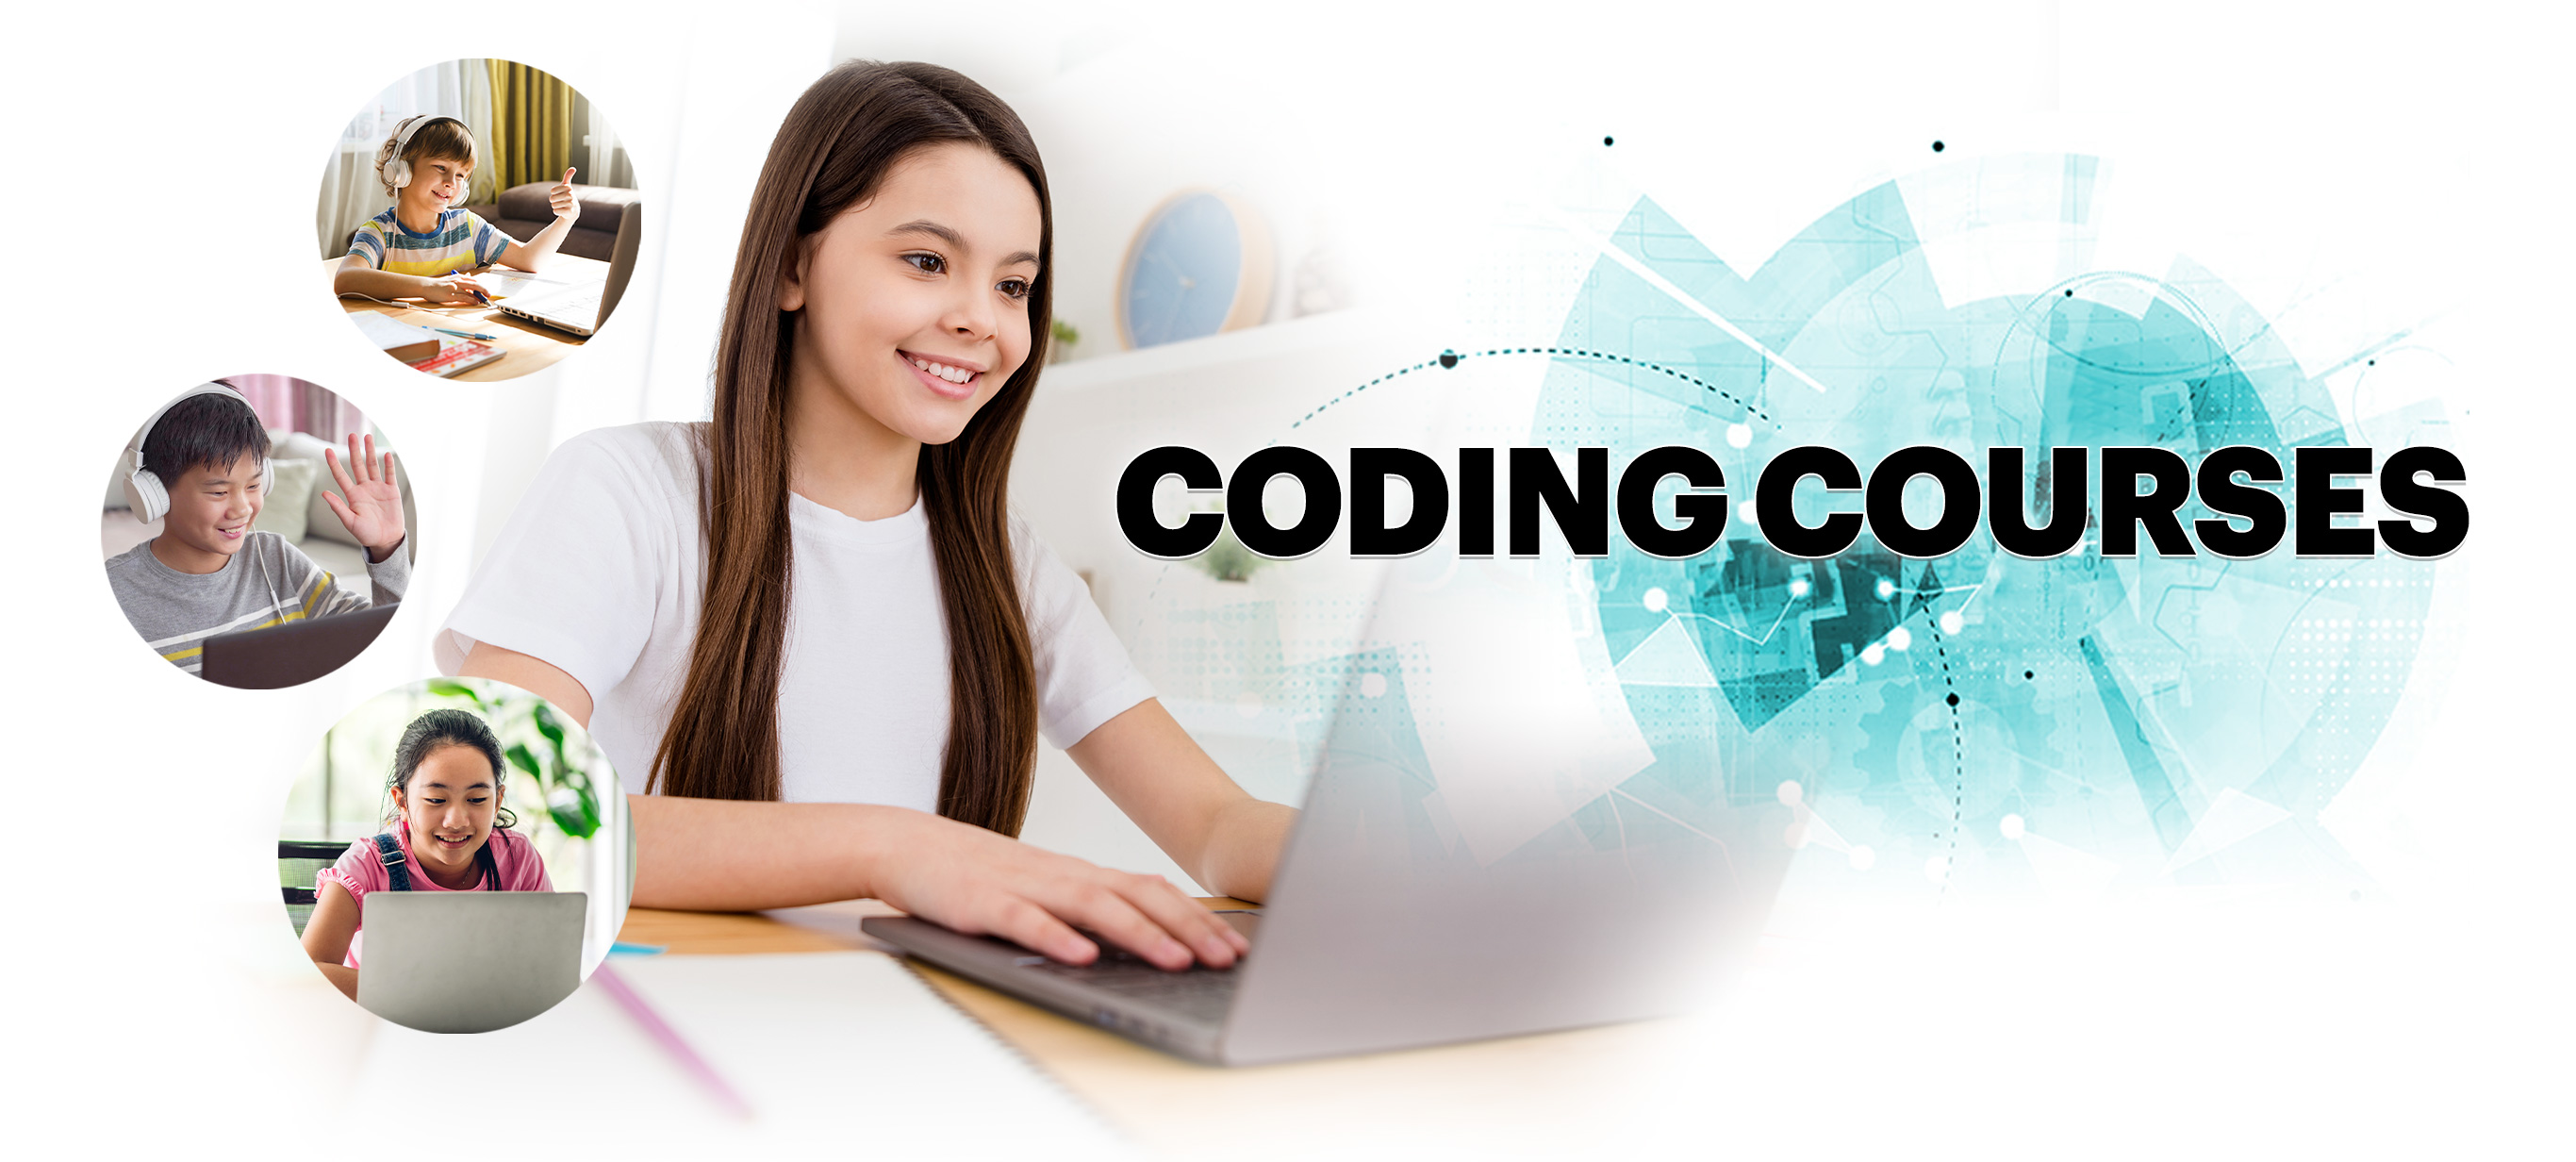 coding-courses-image